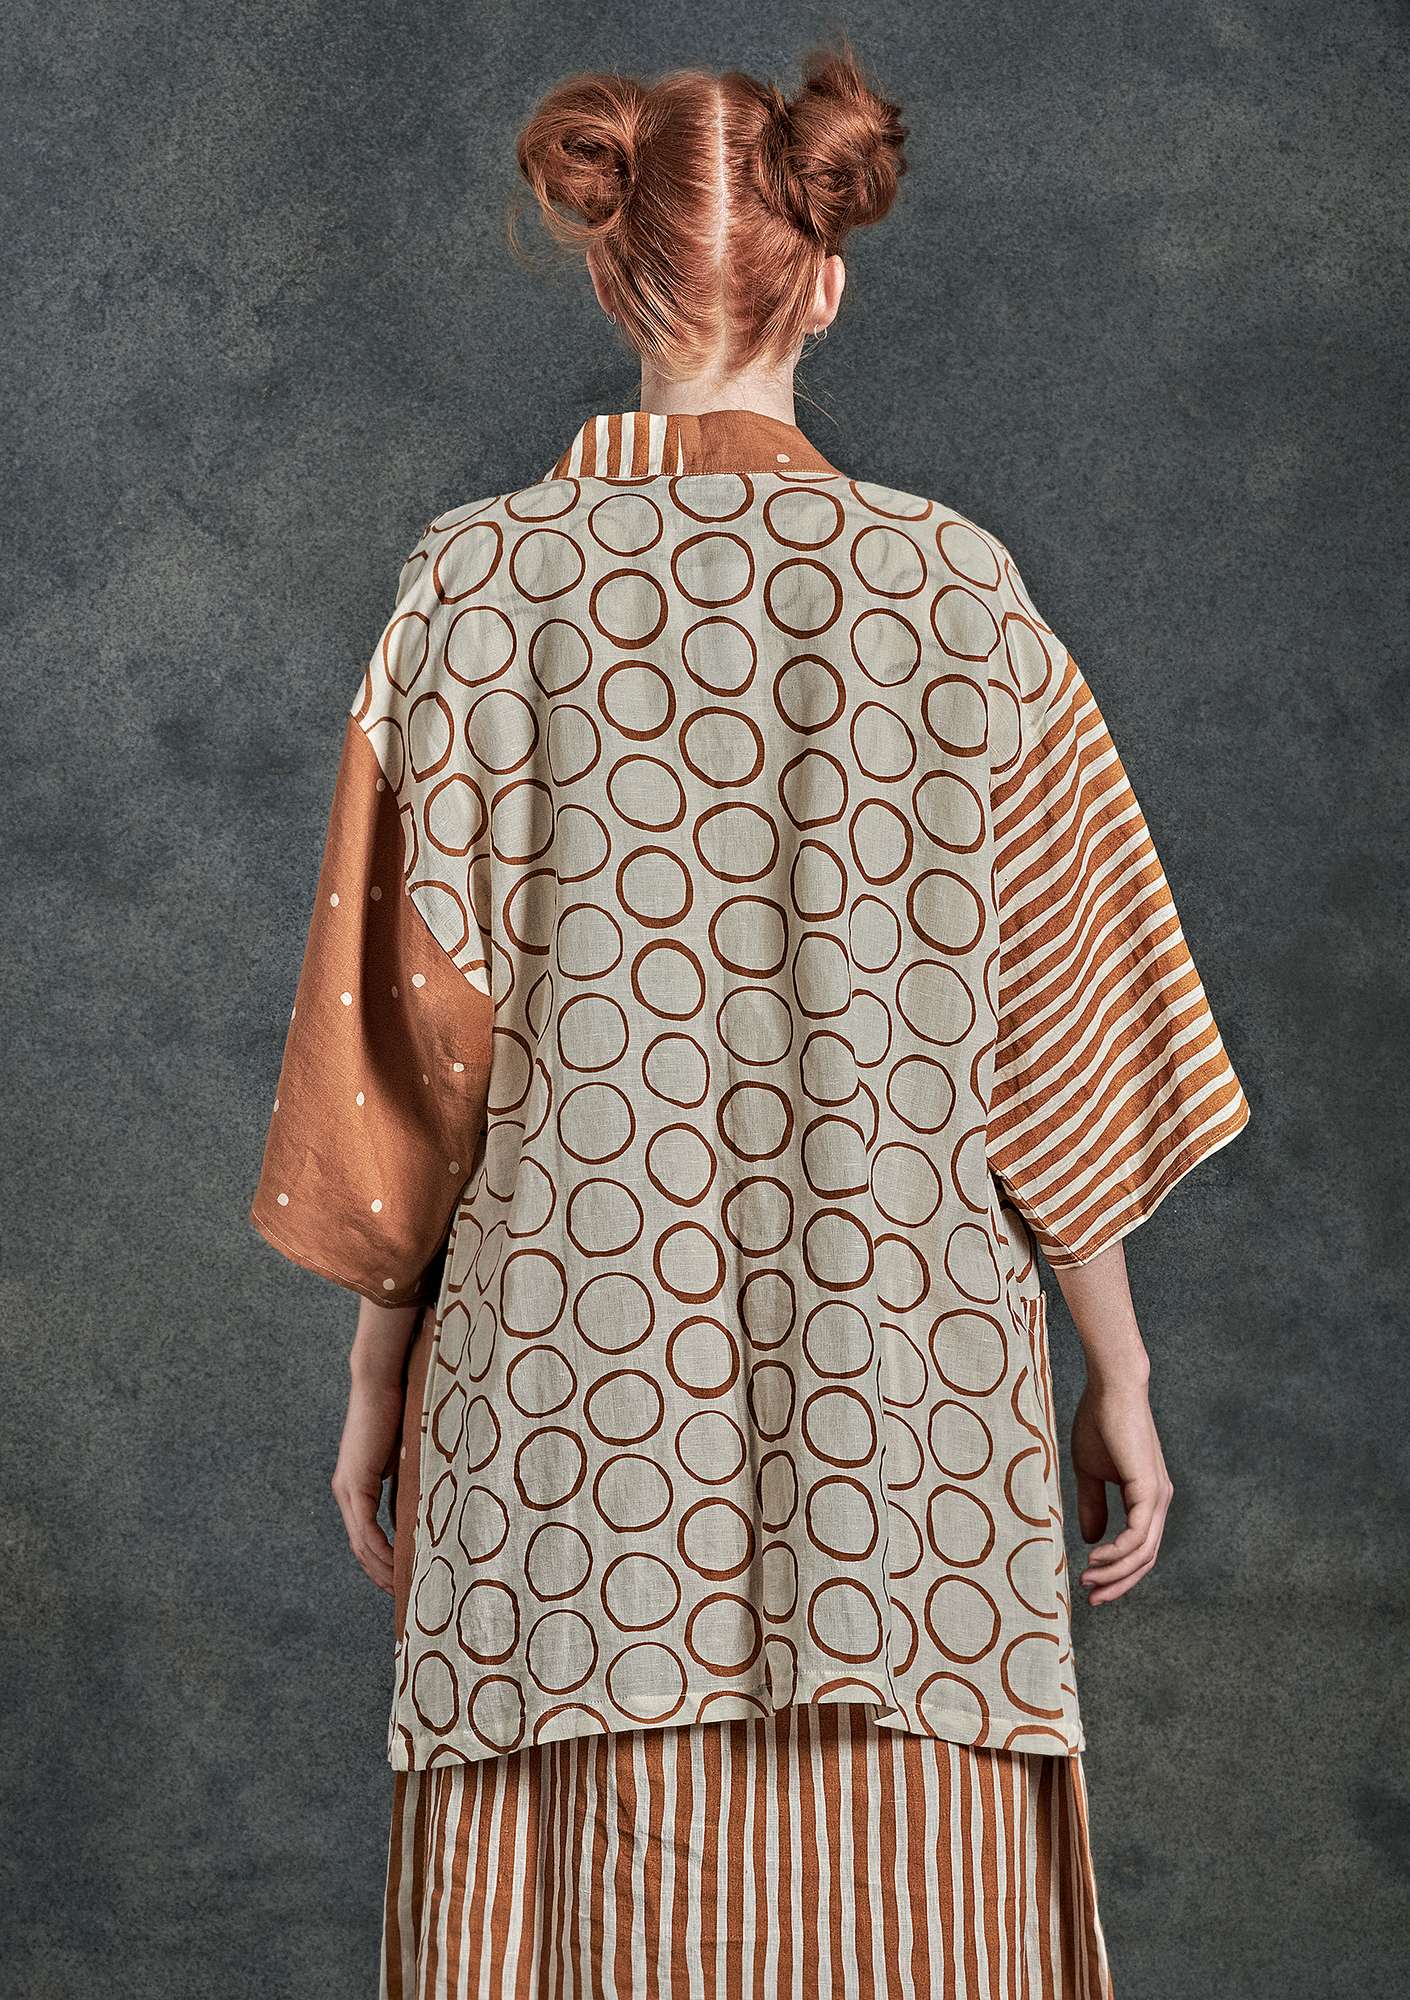  Kimono  Matsumoto  van linnen/katoen ongebleekt/gebrande sienna